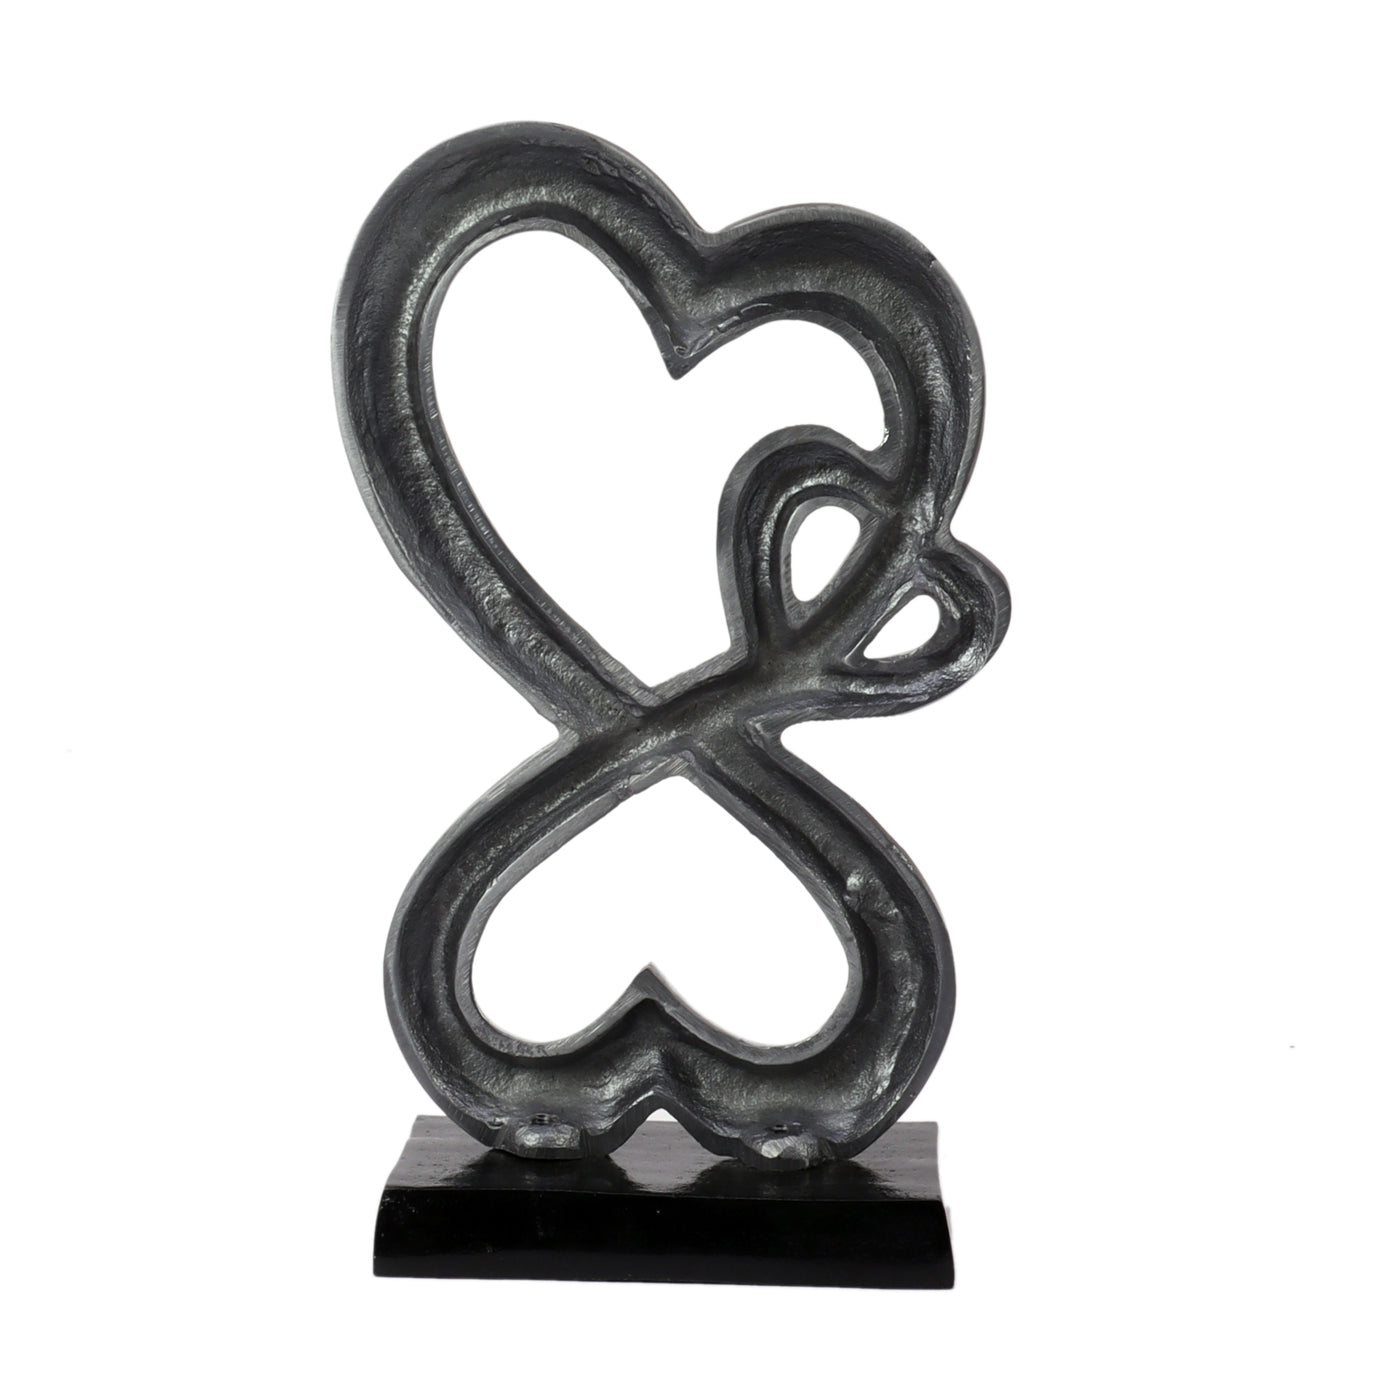 DecorTwist Brings Silver Family Heart Sculpture showpiece